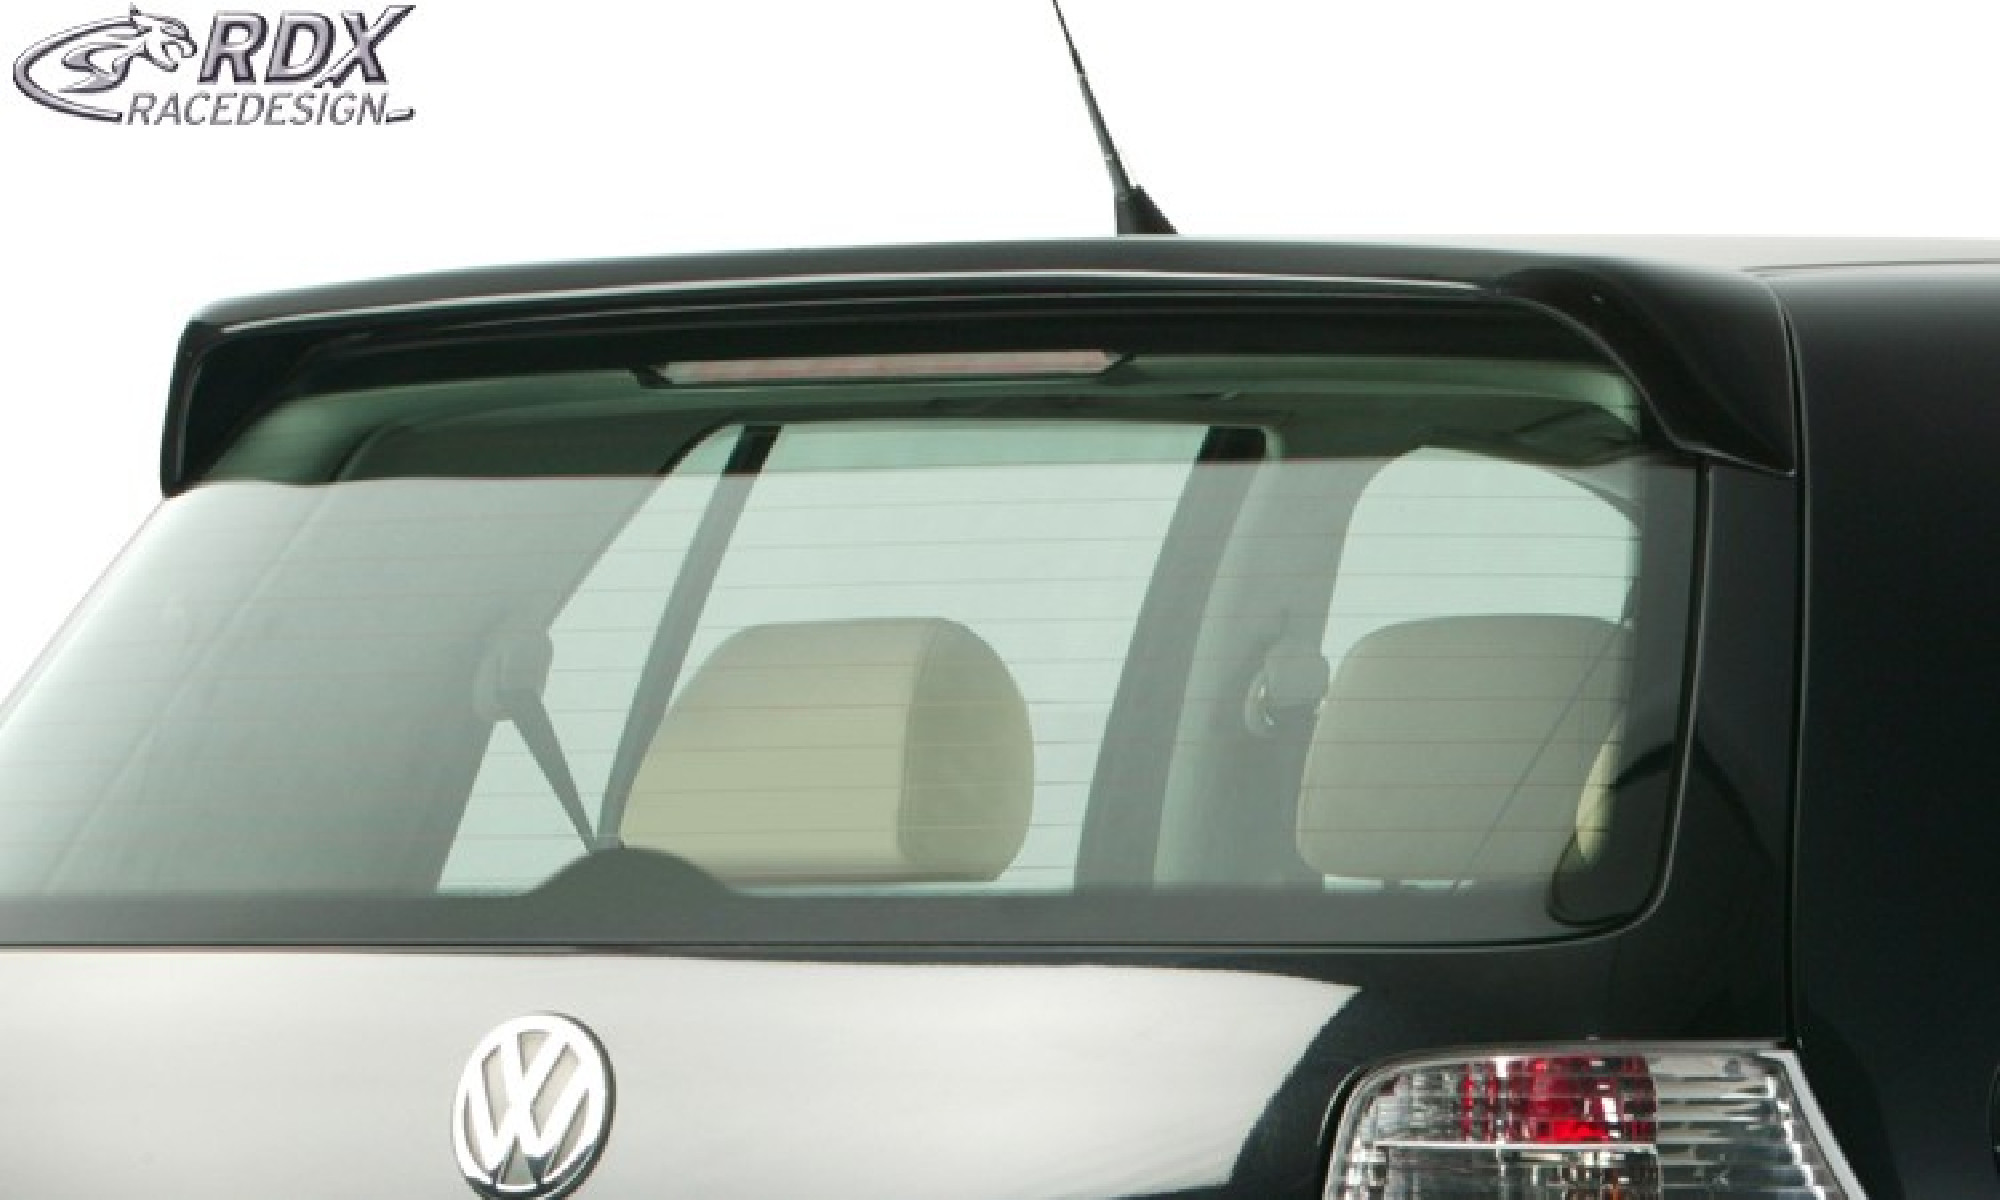 Heckspoiler für VW Golf 4 Dachspoiler Spoiler